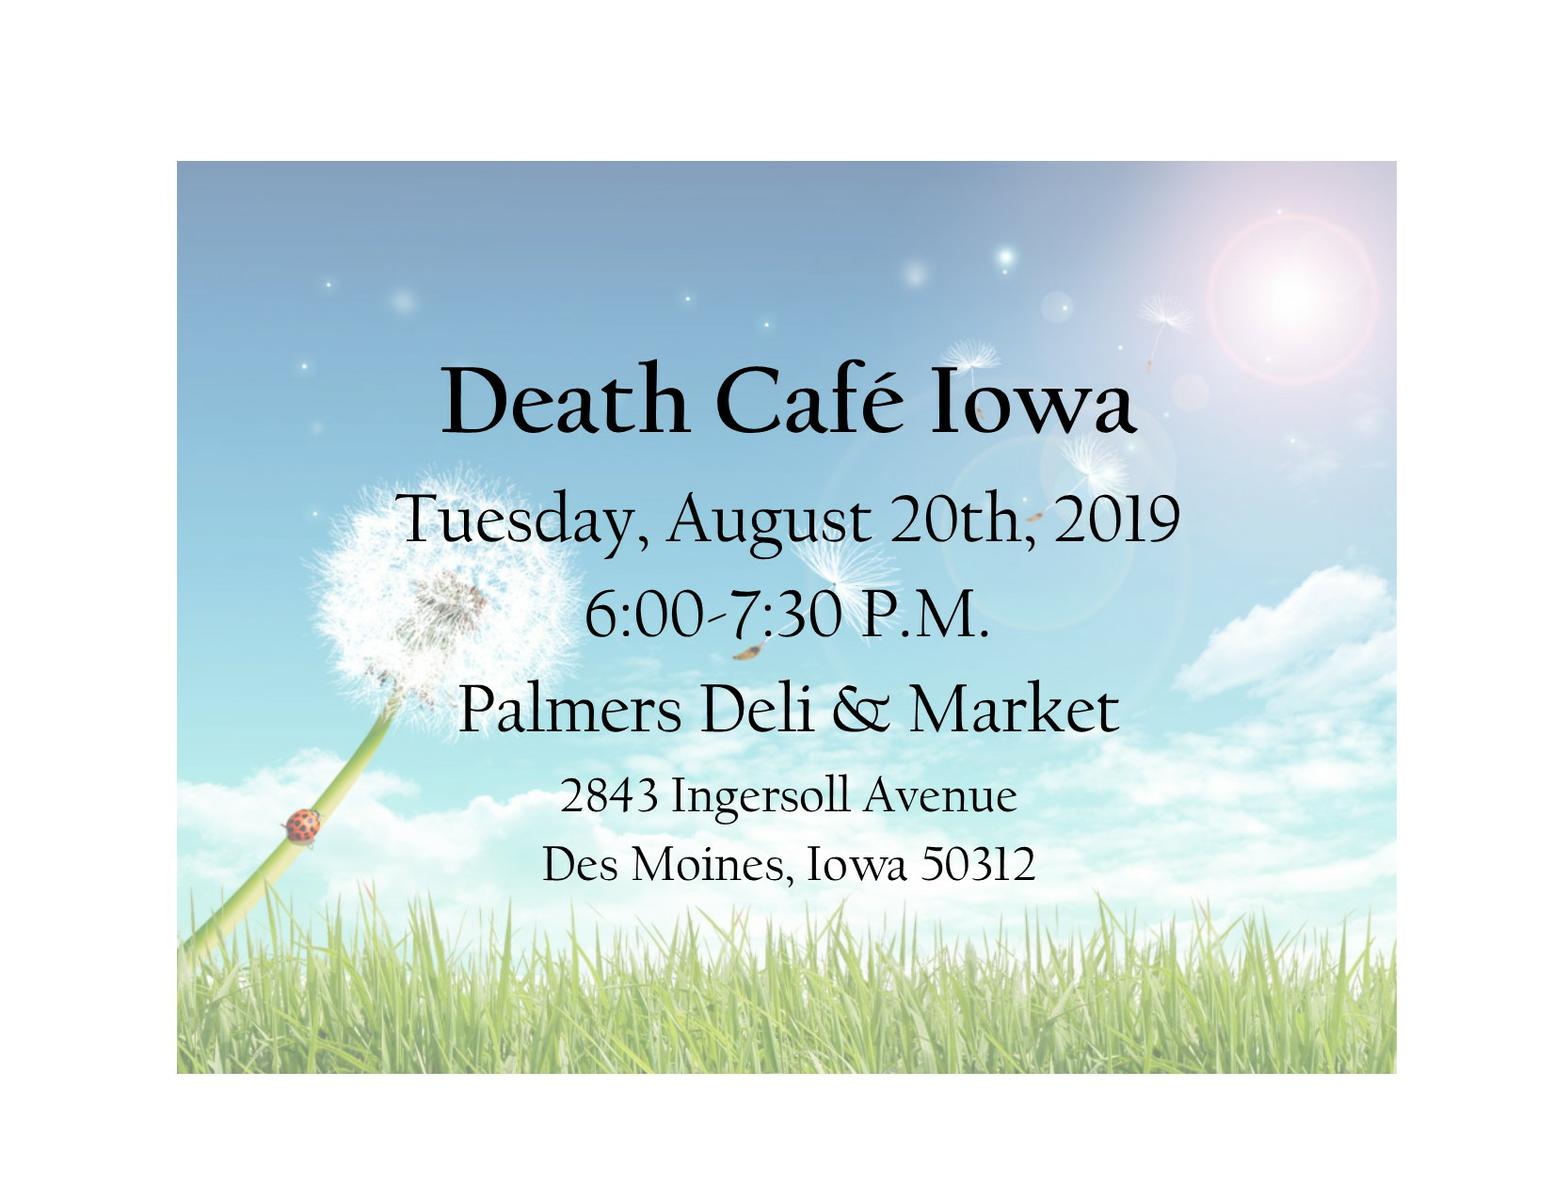 Death Cafe Iowa